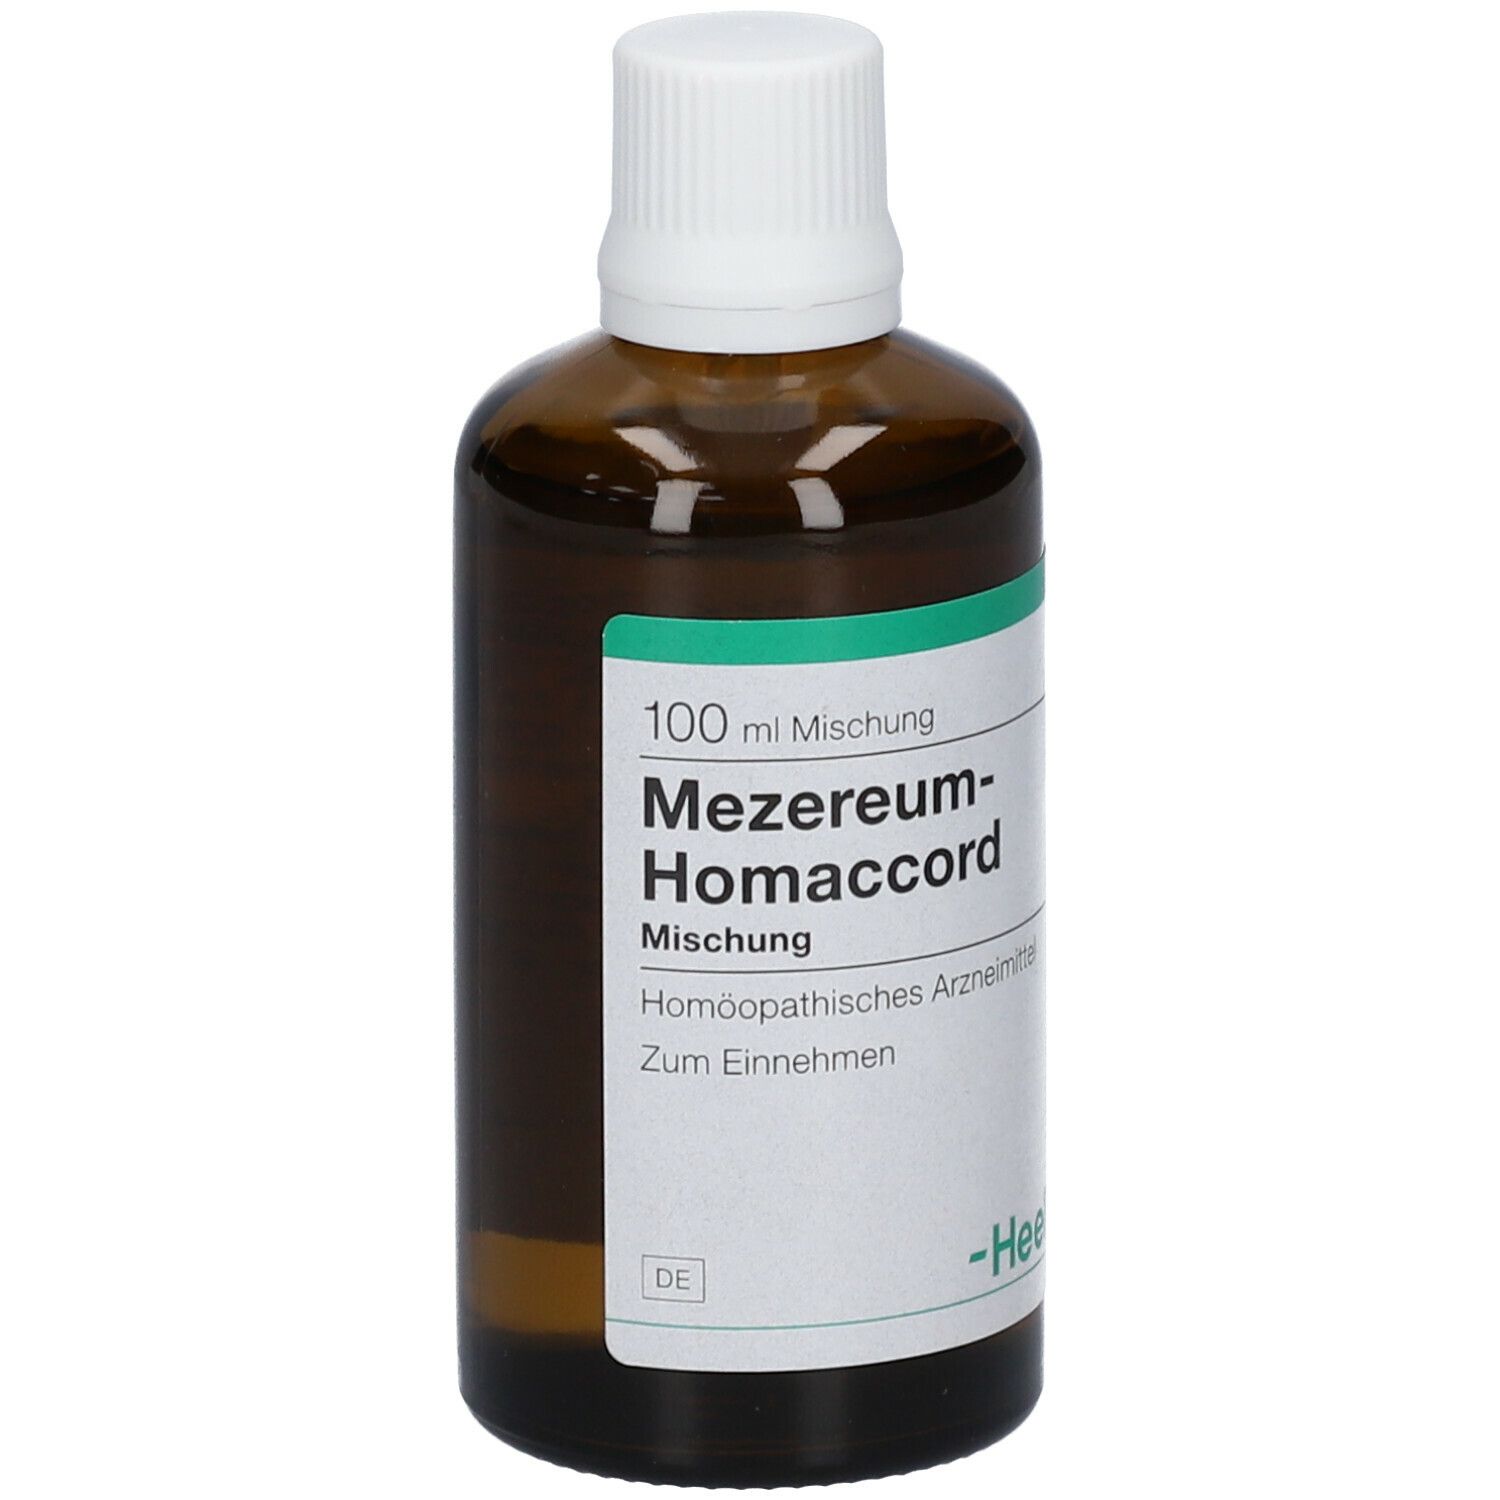 Mezereum-Homaccord® Mischung